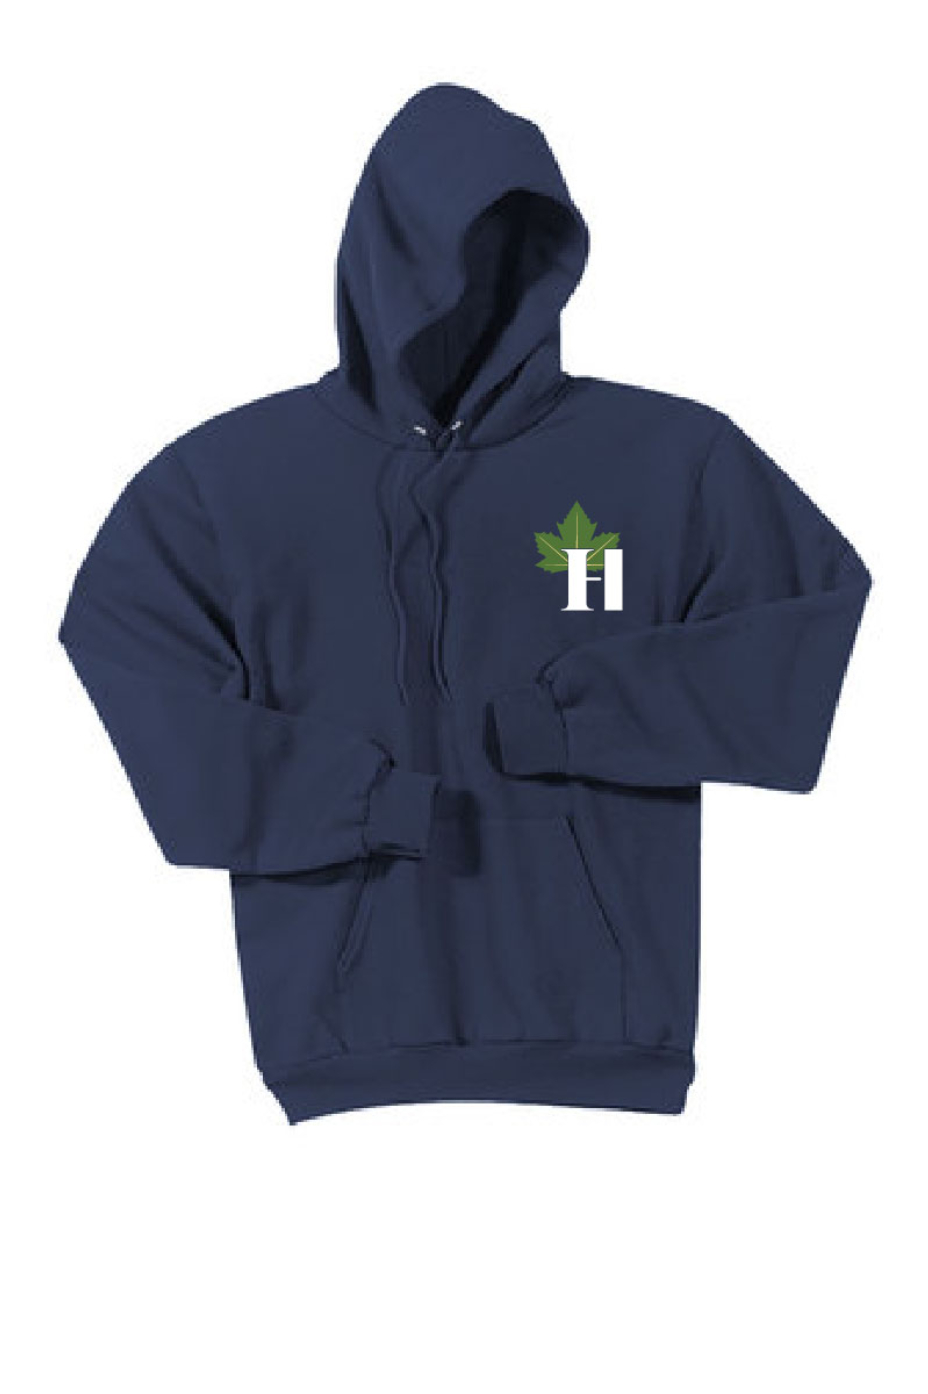 Hillenmeyer Hooded Sweatshirt - PC90H